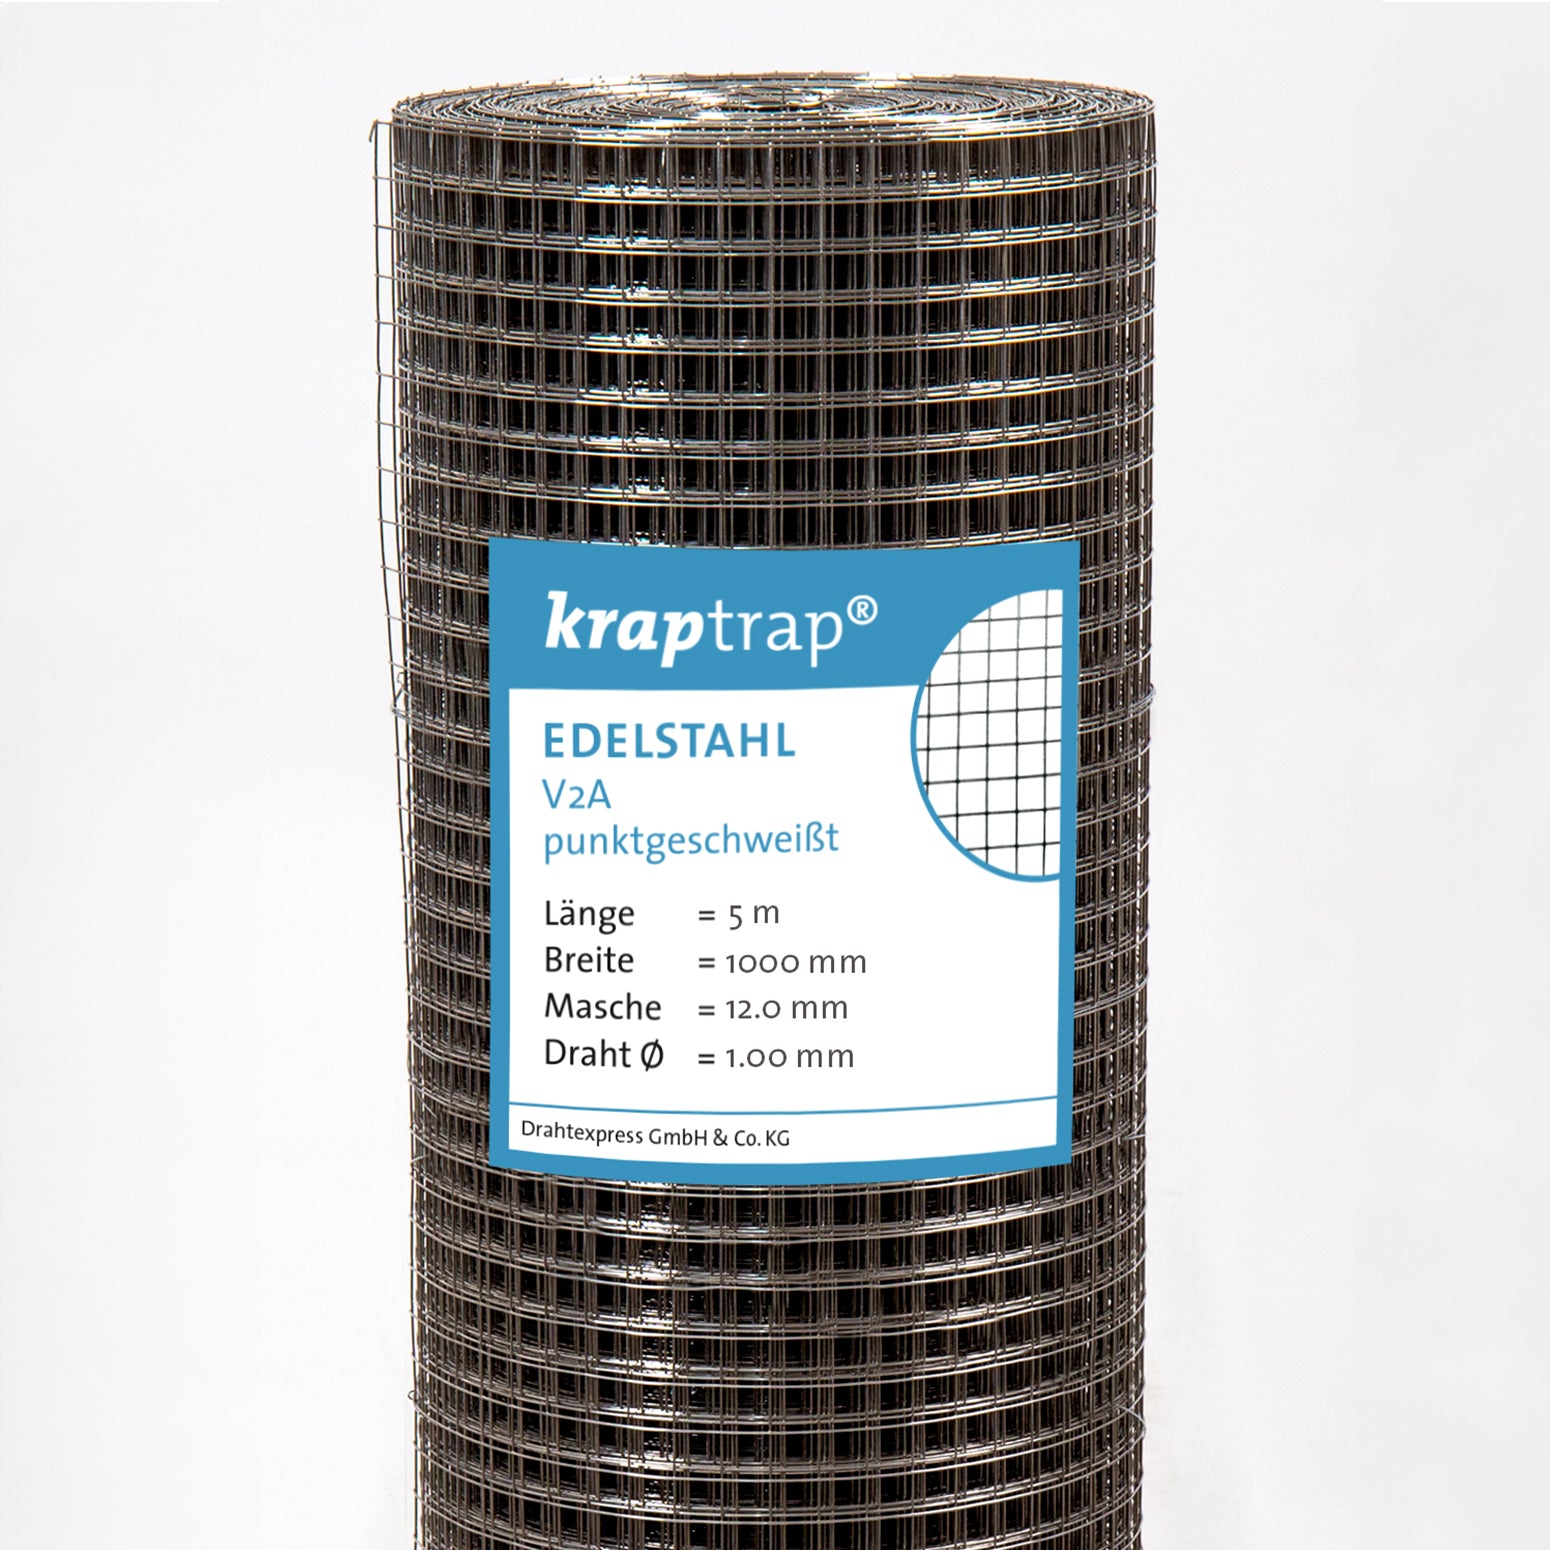 Kraptrap® Edelstahl Drahtgitter V2A 12 x 12 mm mit 1,0 mm Stärke